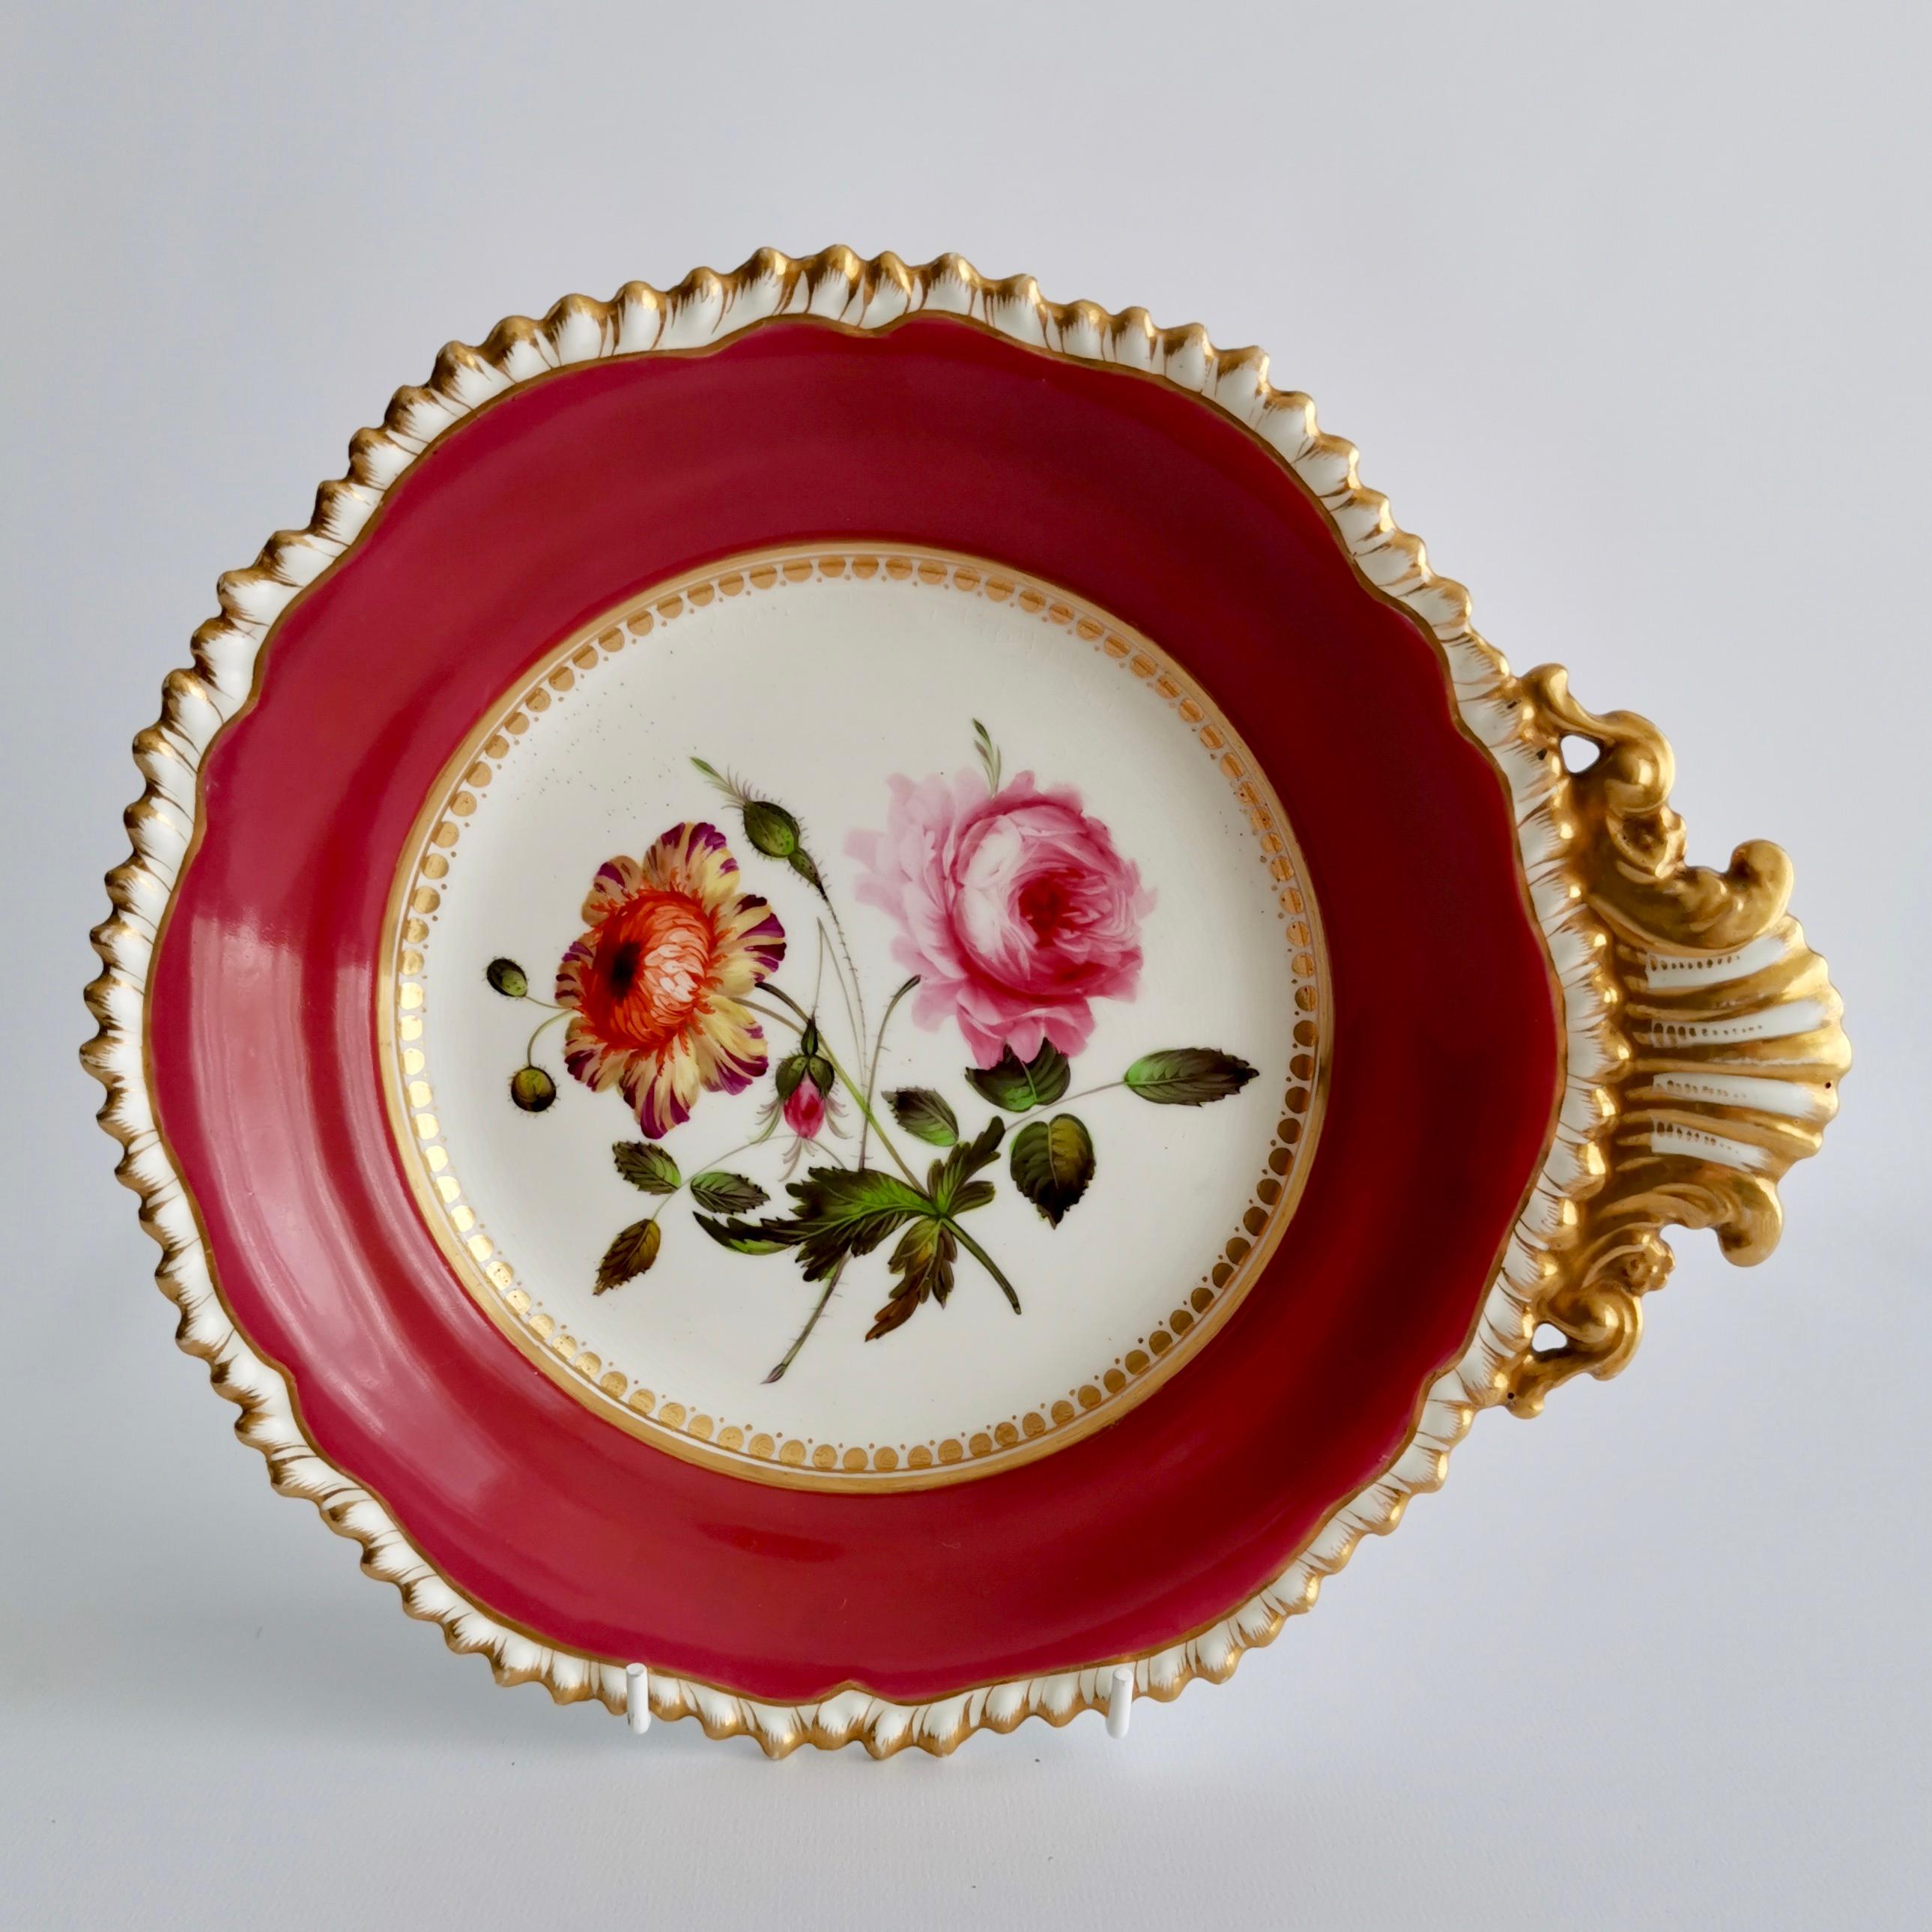 Regency Coalport Porcelain Part-Dessert Service, Maroon Botanical Cecil Jones, 1820-1825